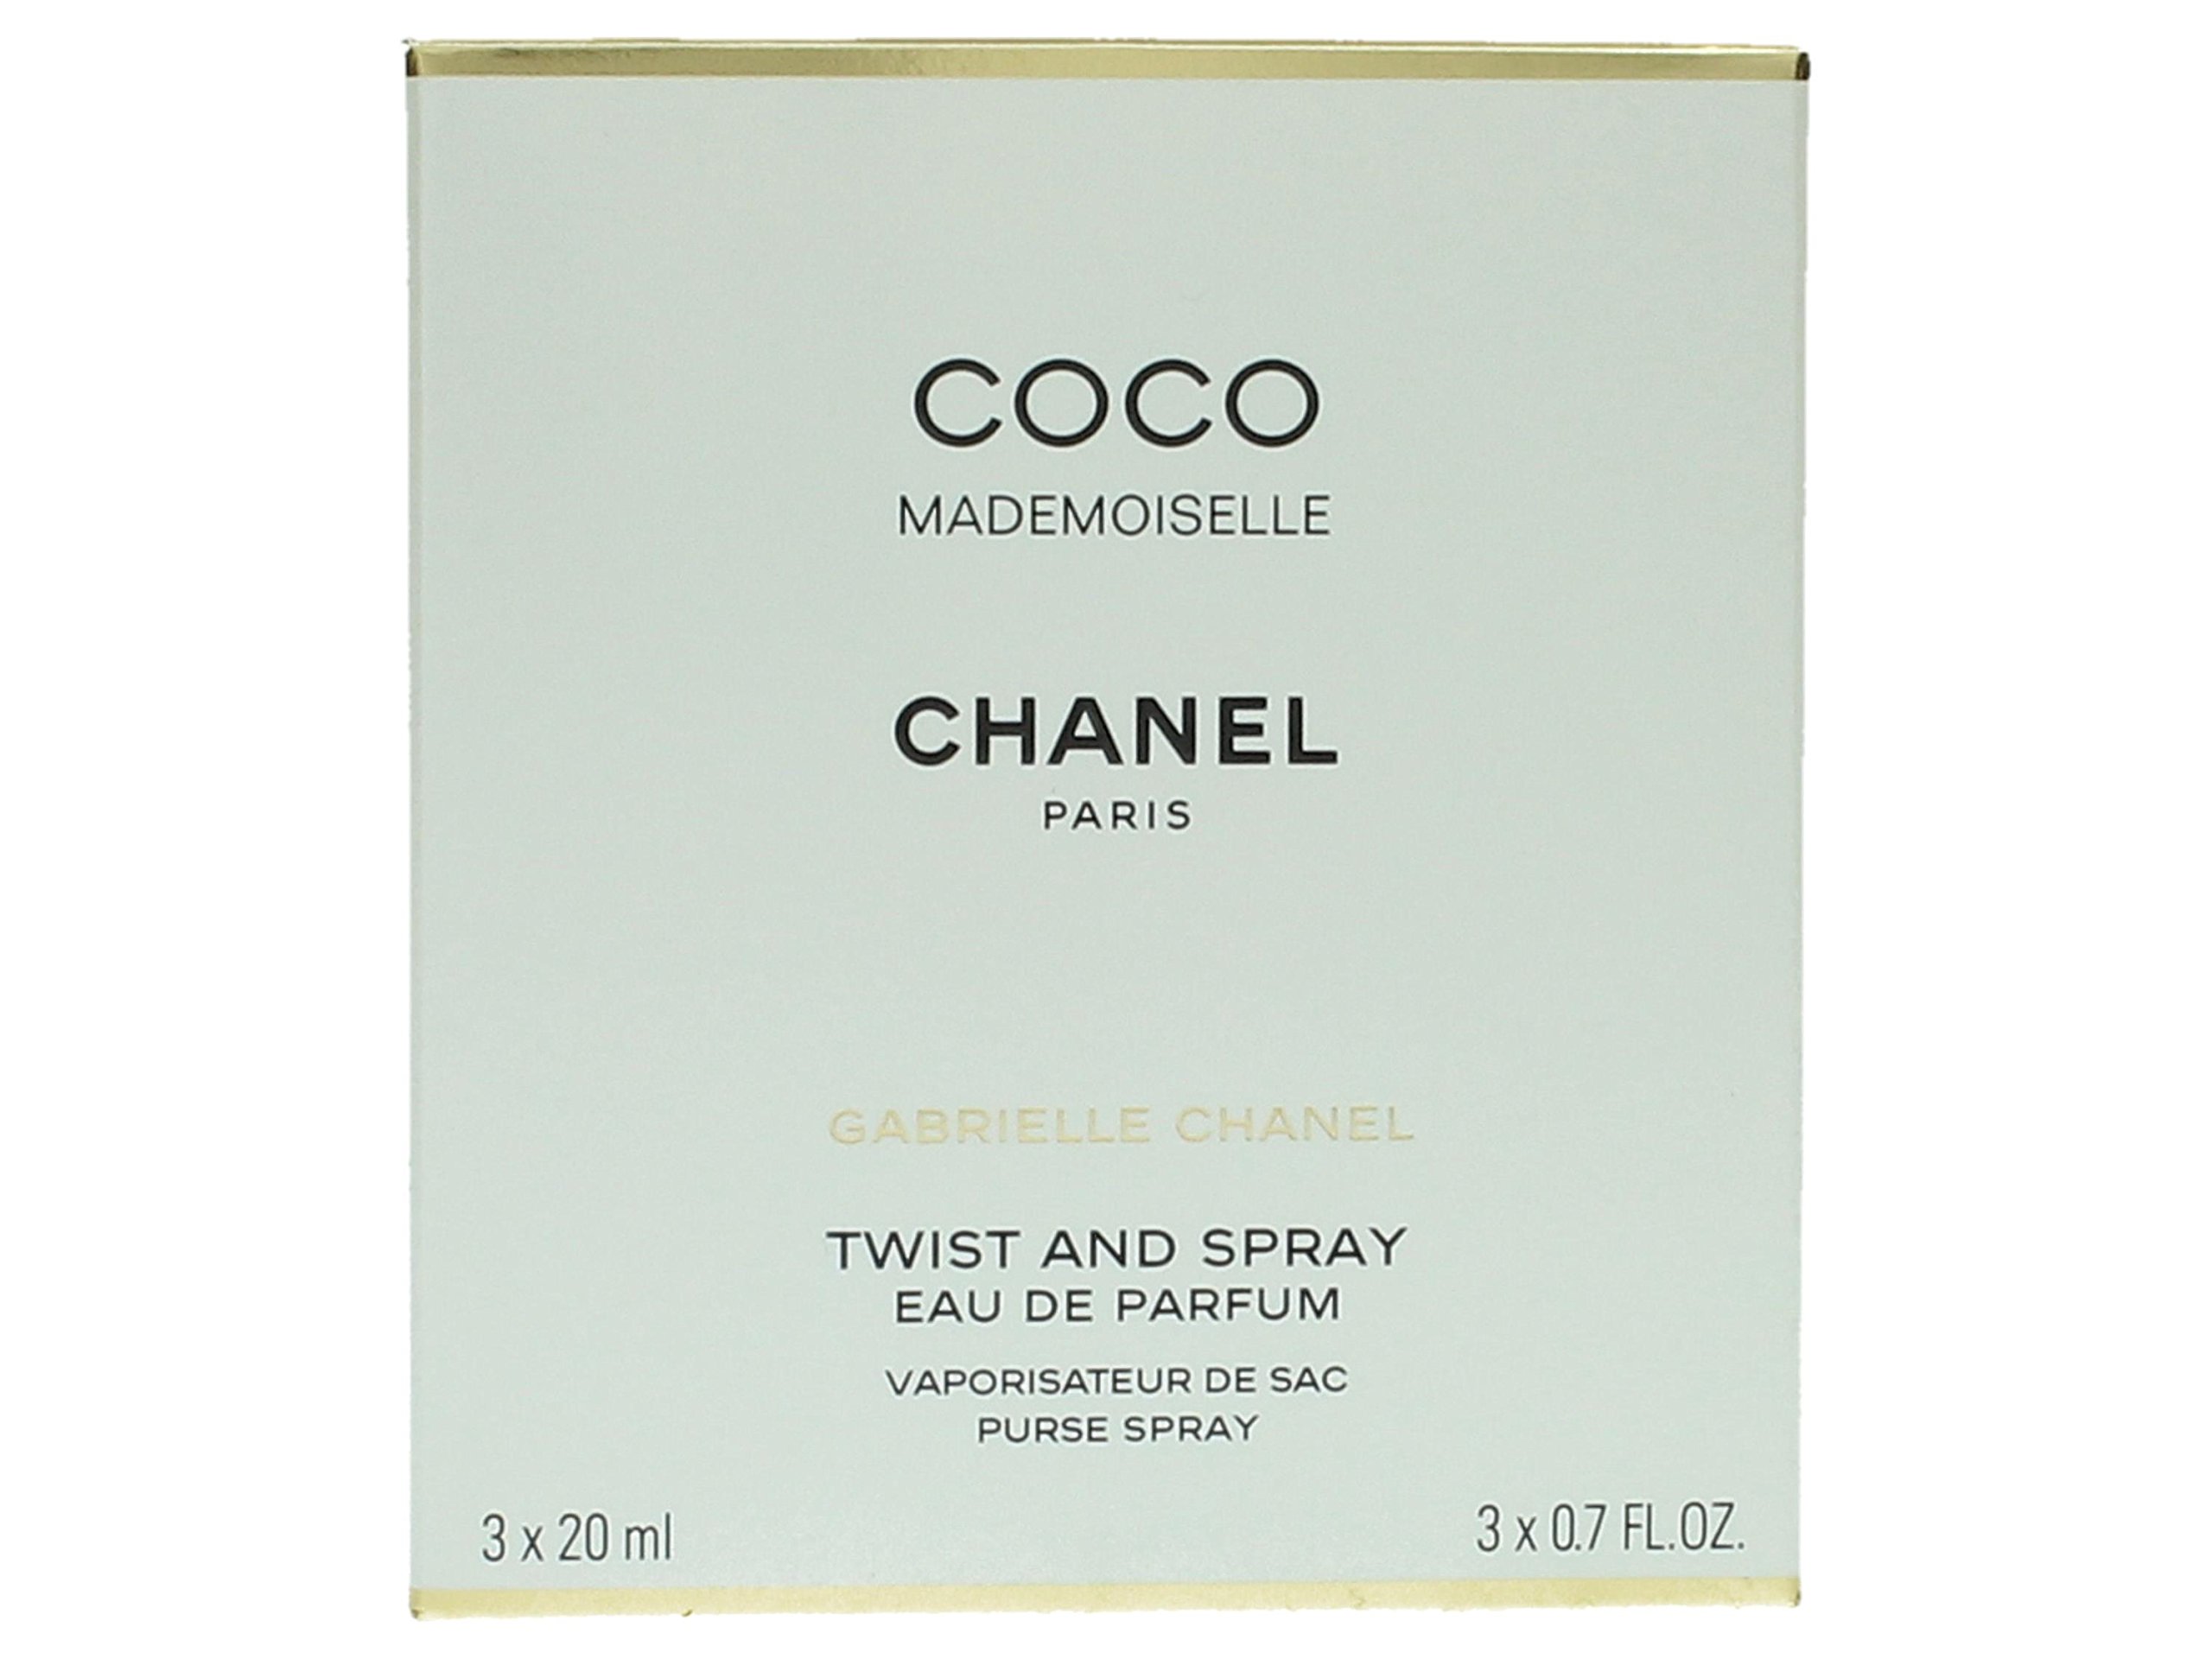 Gabrielle Chanel Eau de Parfum Twist  Spray Unboxing  Elegance Of She   YouTube